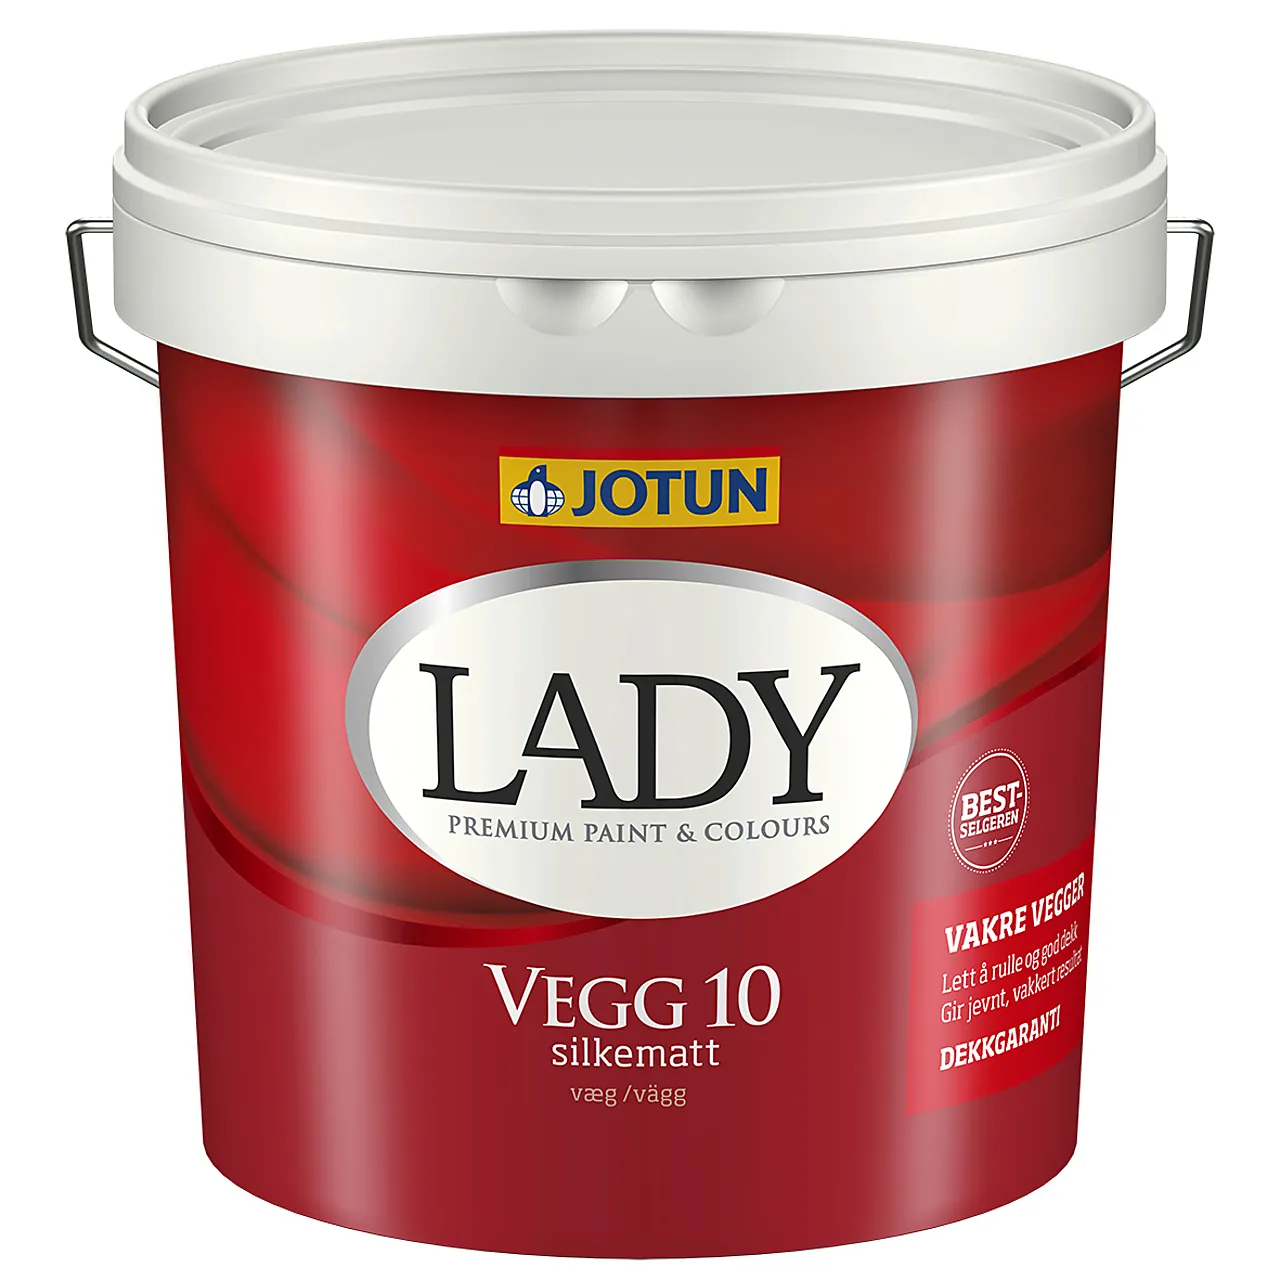 Lady Vegg 10 b-base 2,7 liter